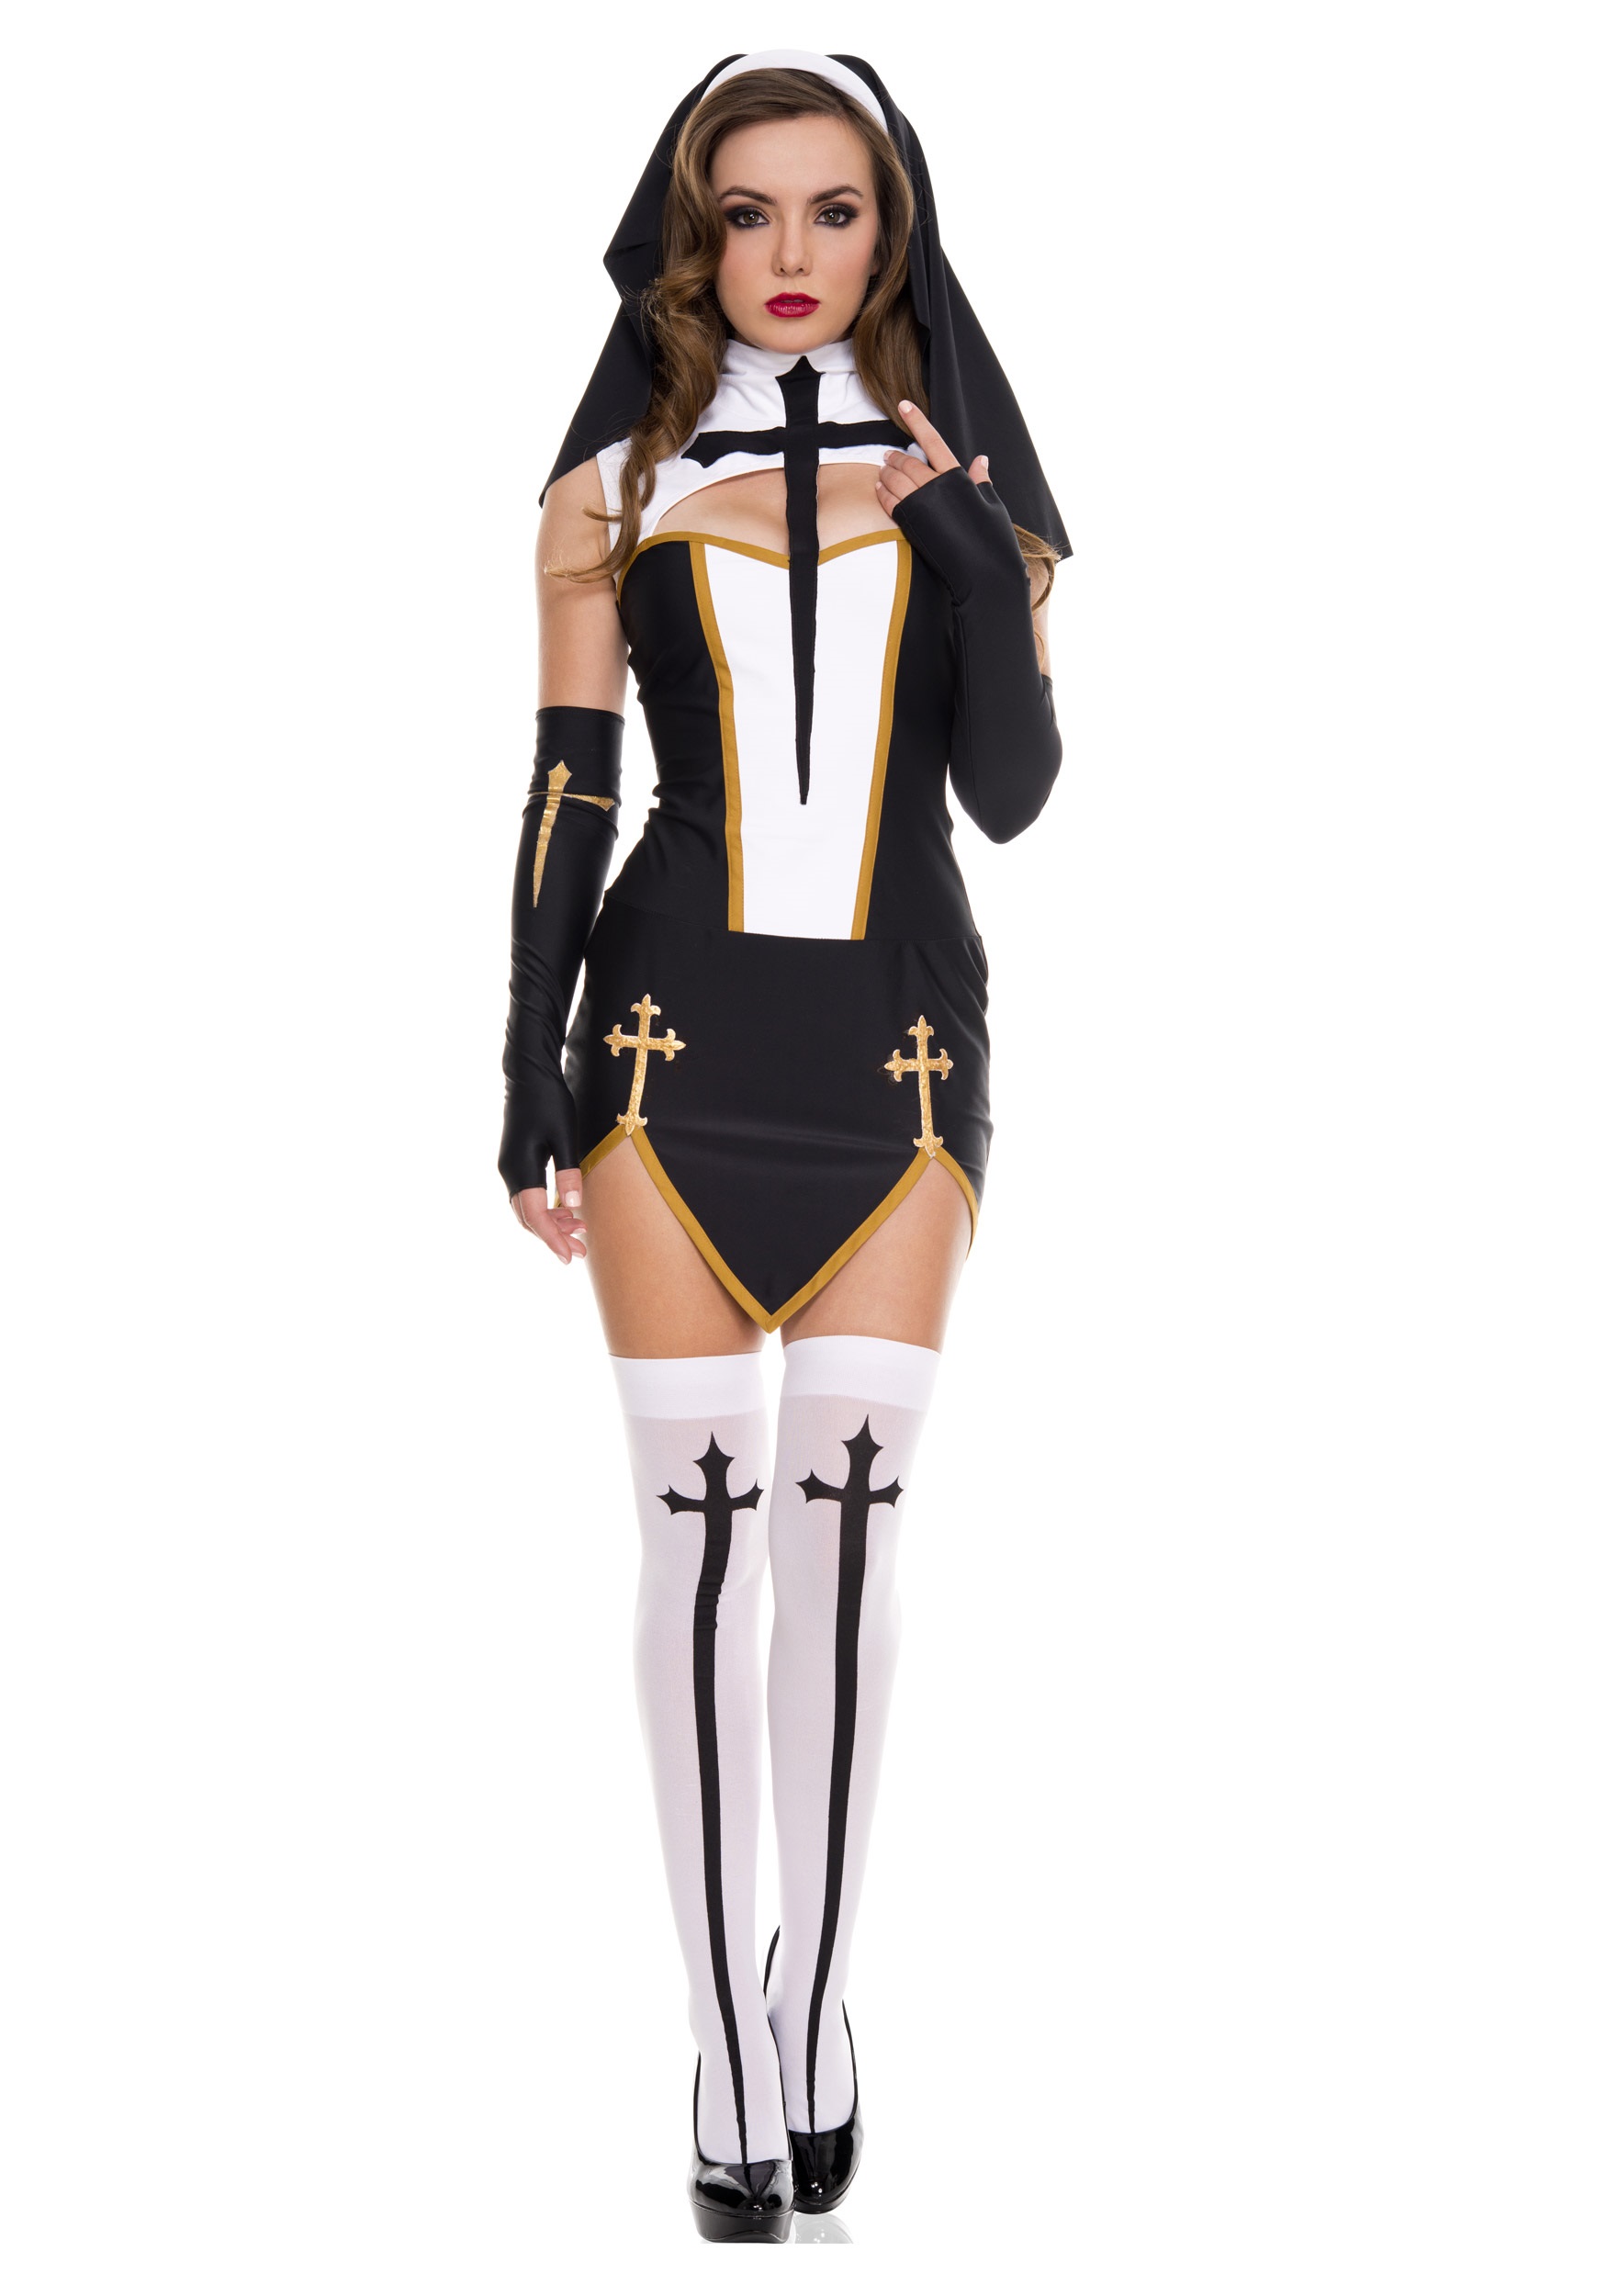 Bad Habit Nun Costume W/ Dress & Thigh High Stockings